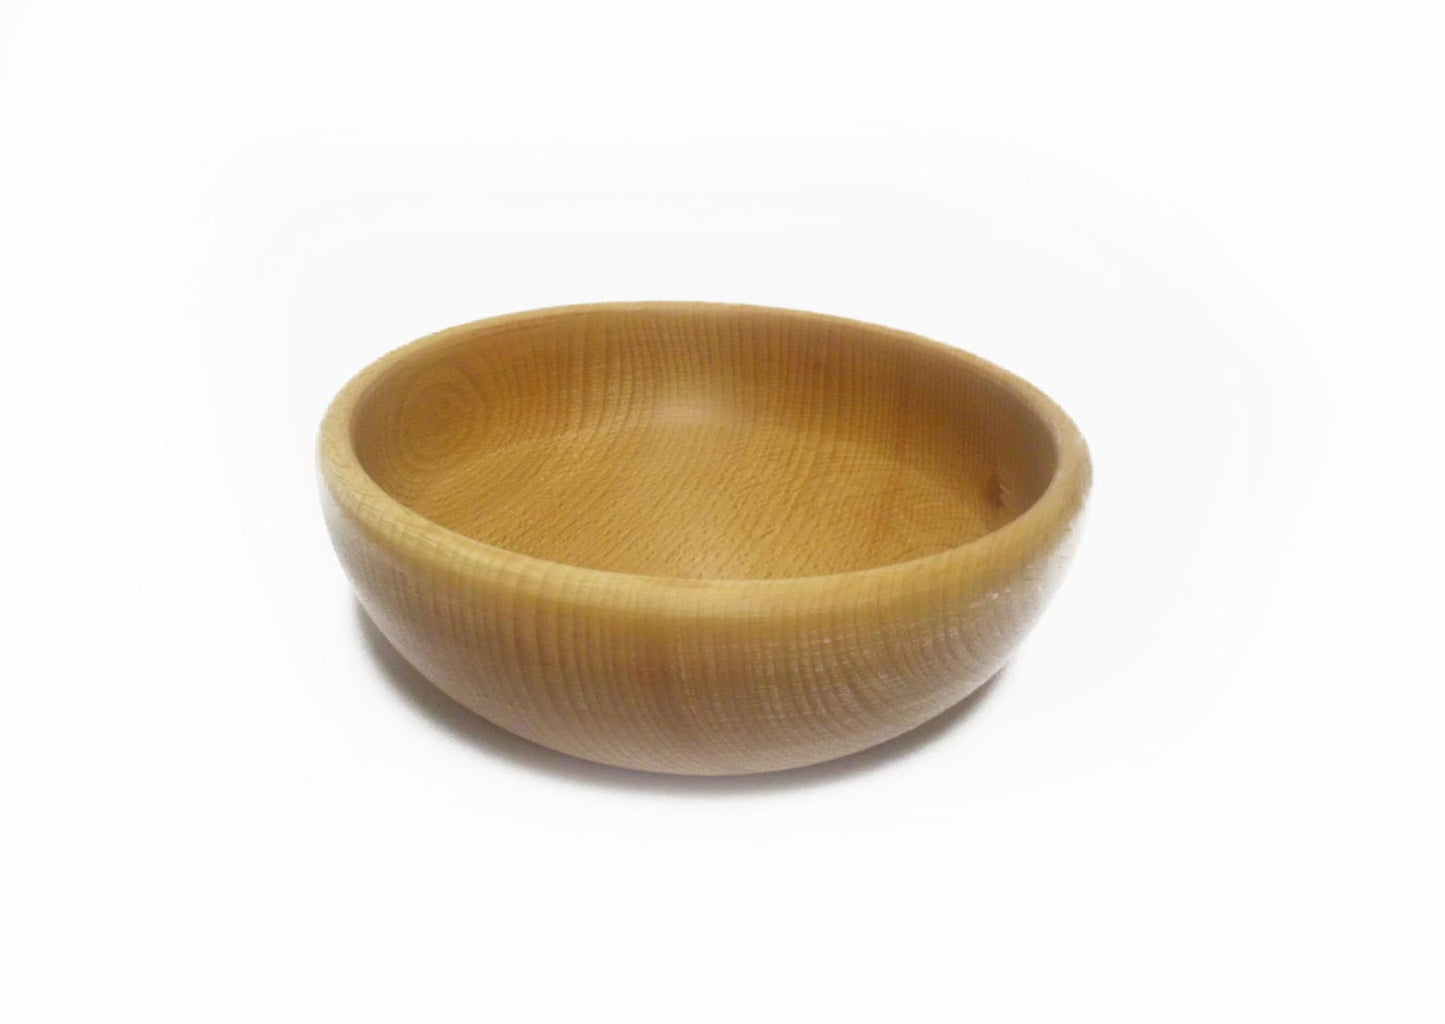 Beech bowl 12cm bowl fruit bowl wooden bowl decorative bowl snack bowl wood